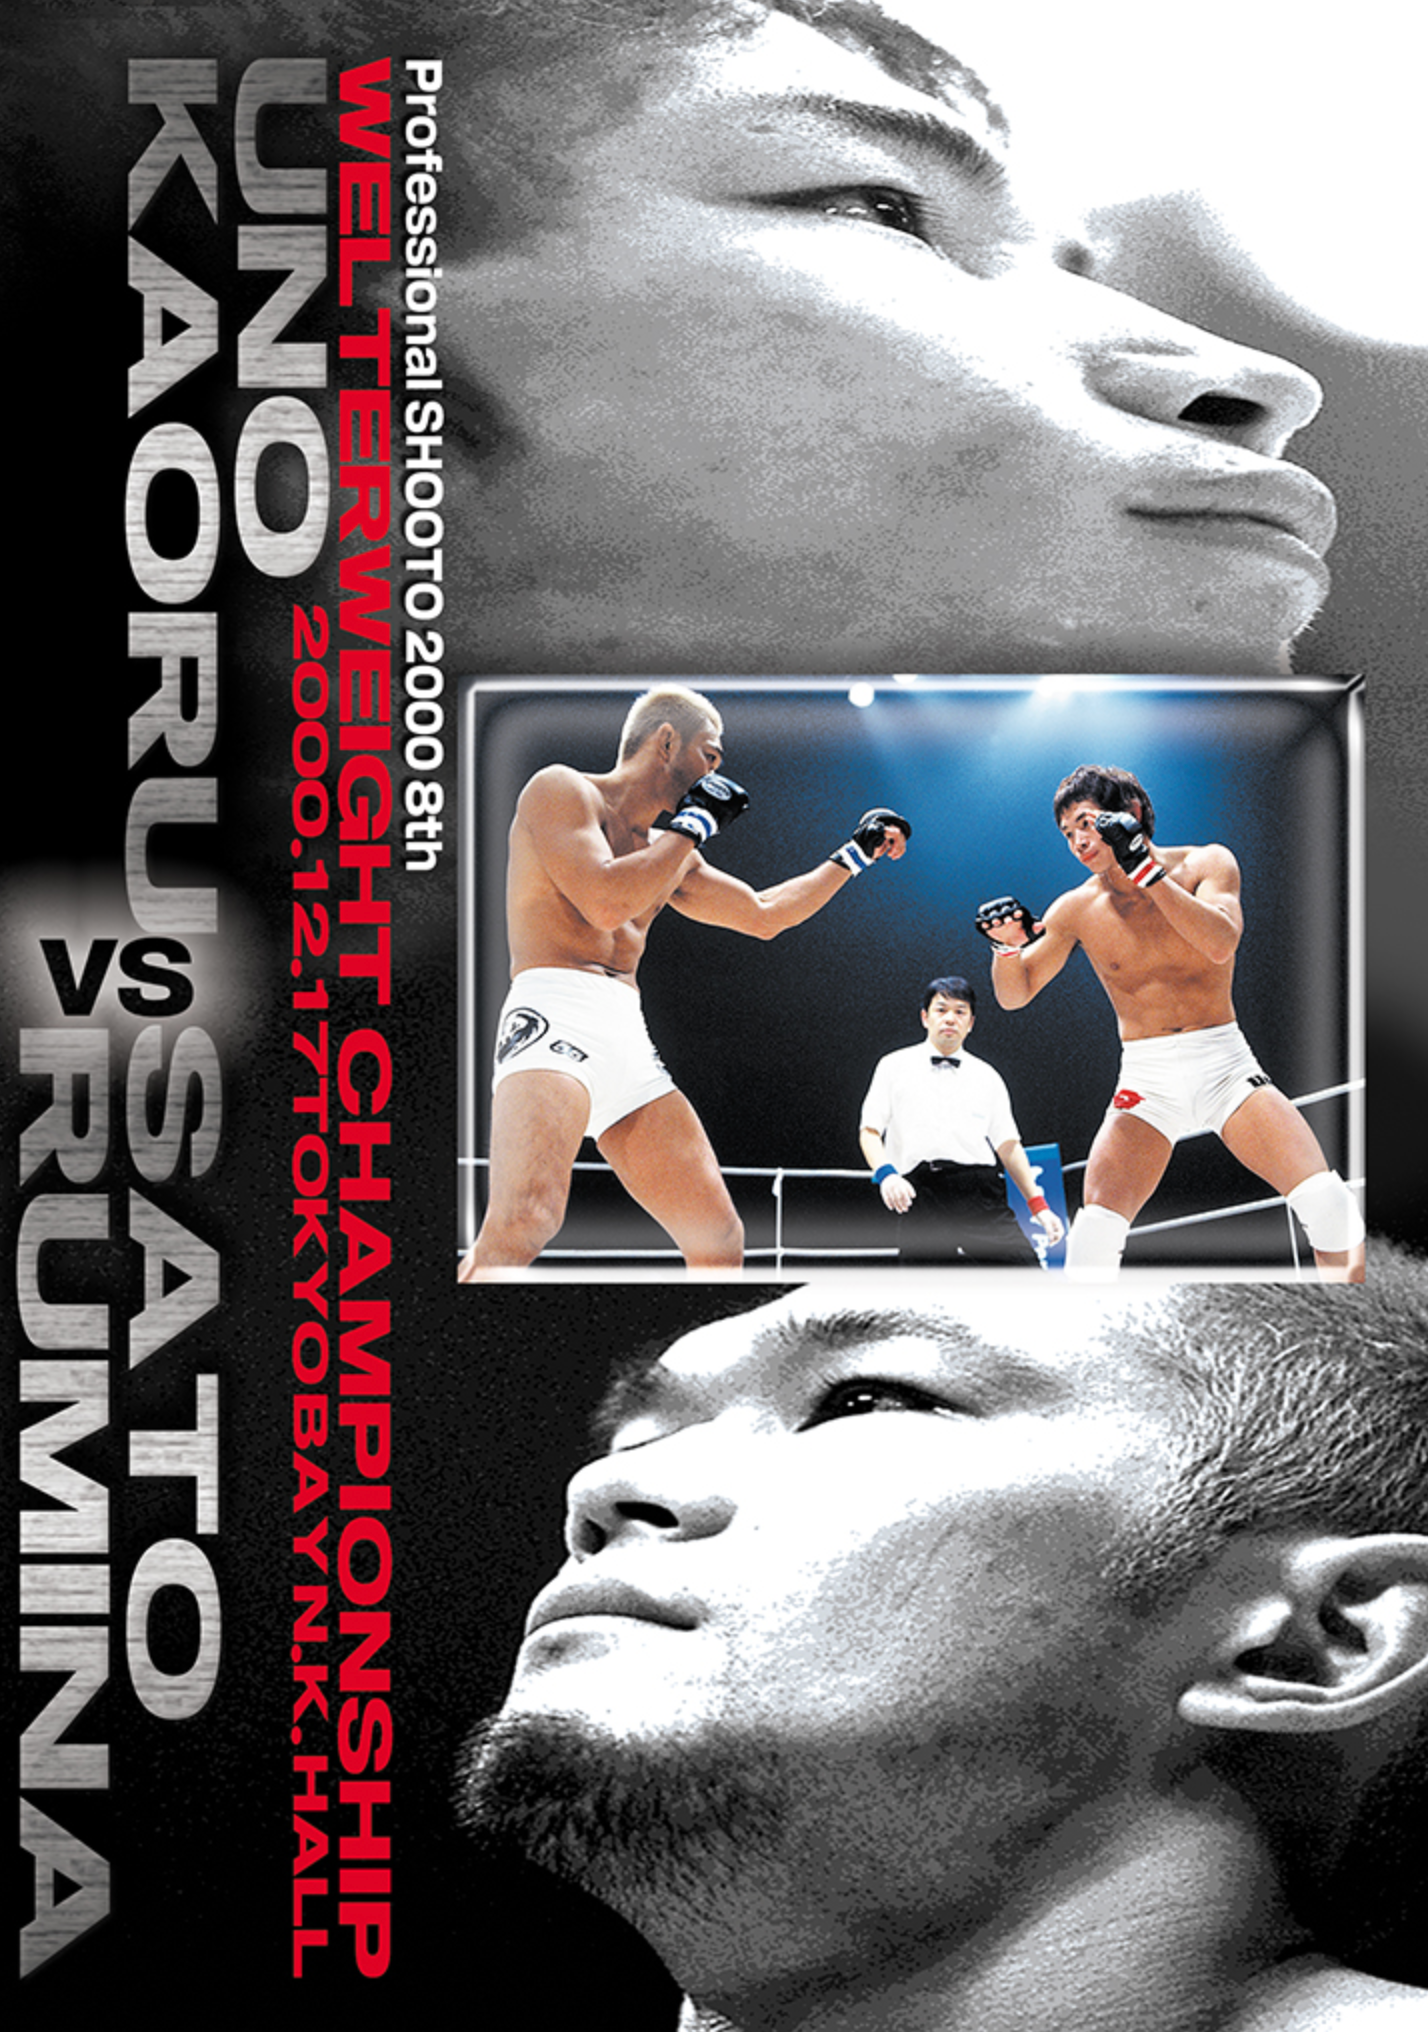 Uno vs Rumina Shooto DVD AKA R.E.A.D Final - Budovideos Inc